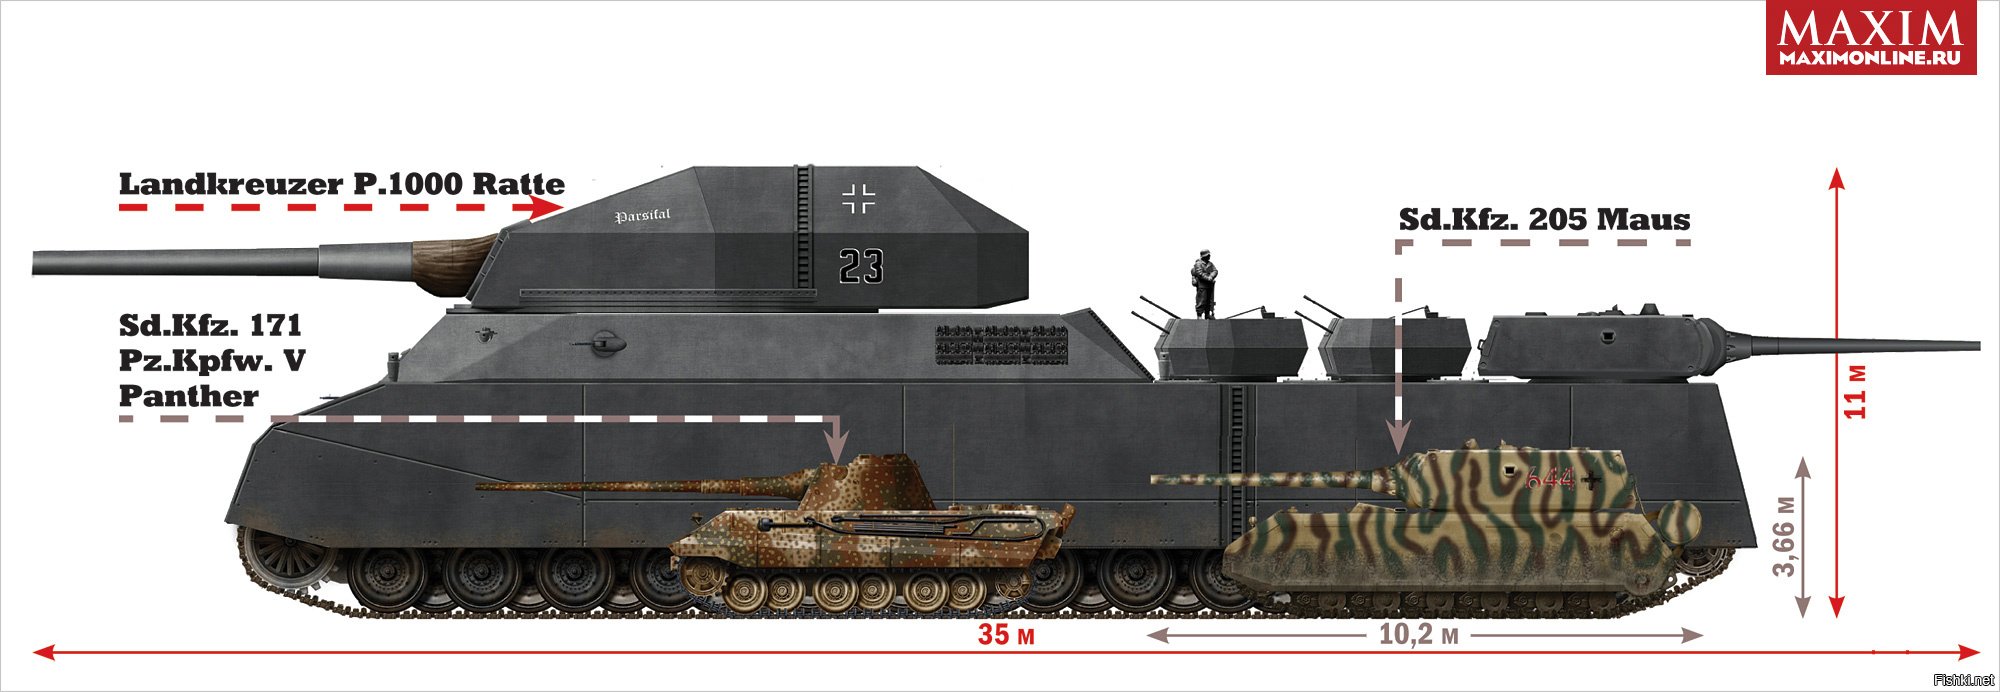 Сколько тонн танк. Немецкий танк РАТТЕ характеристики. Танк р1000 Ratte. Танк Landkreuzer p1000 Ratte. Танк РАТТЕ П 1000.